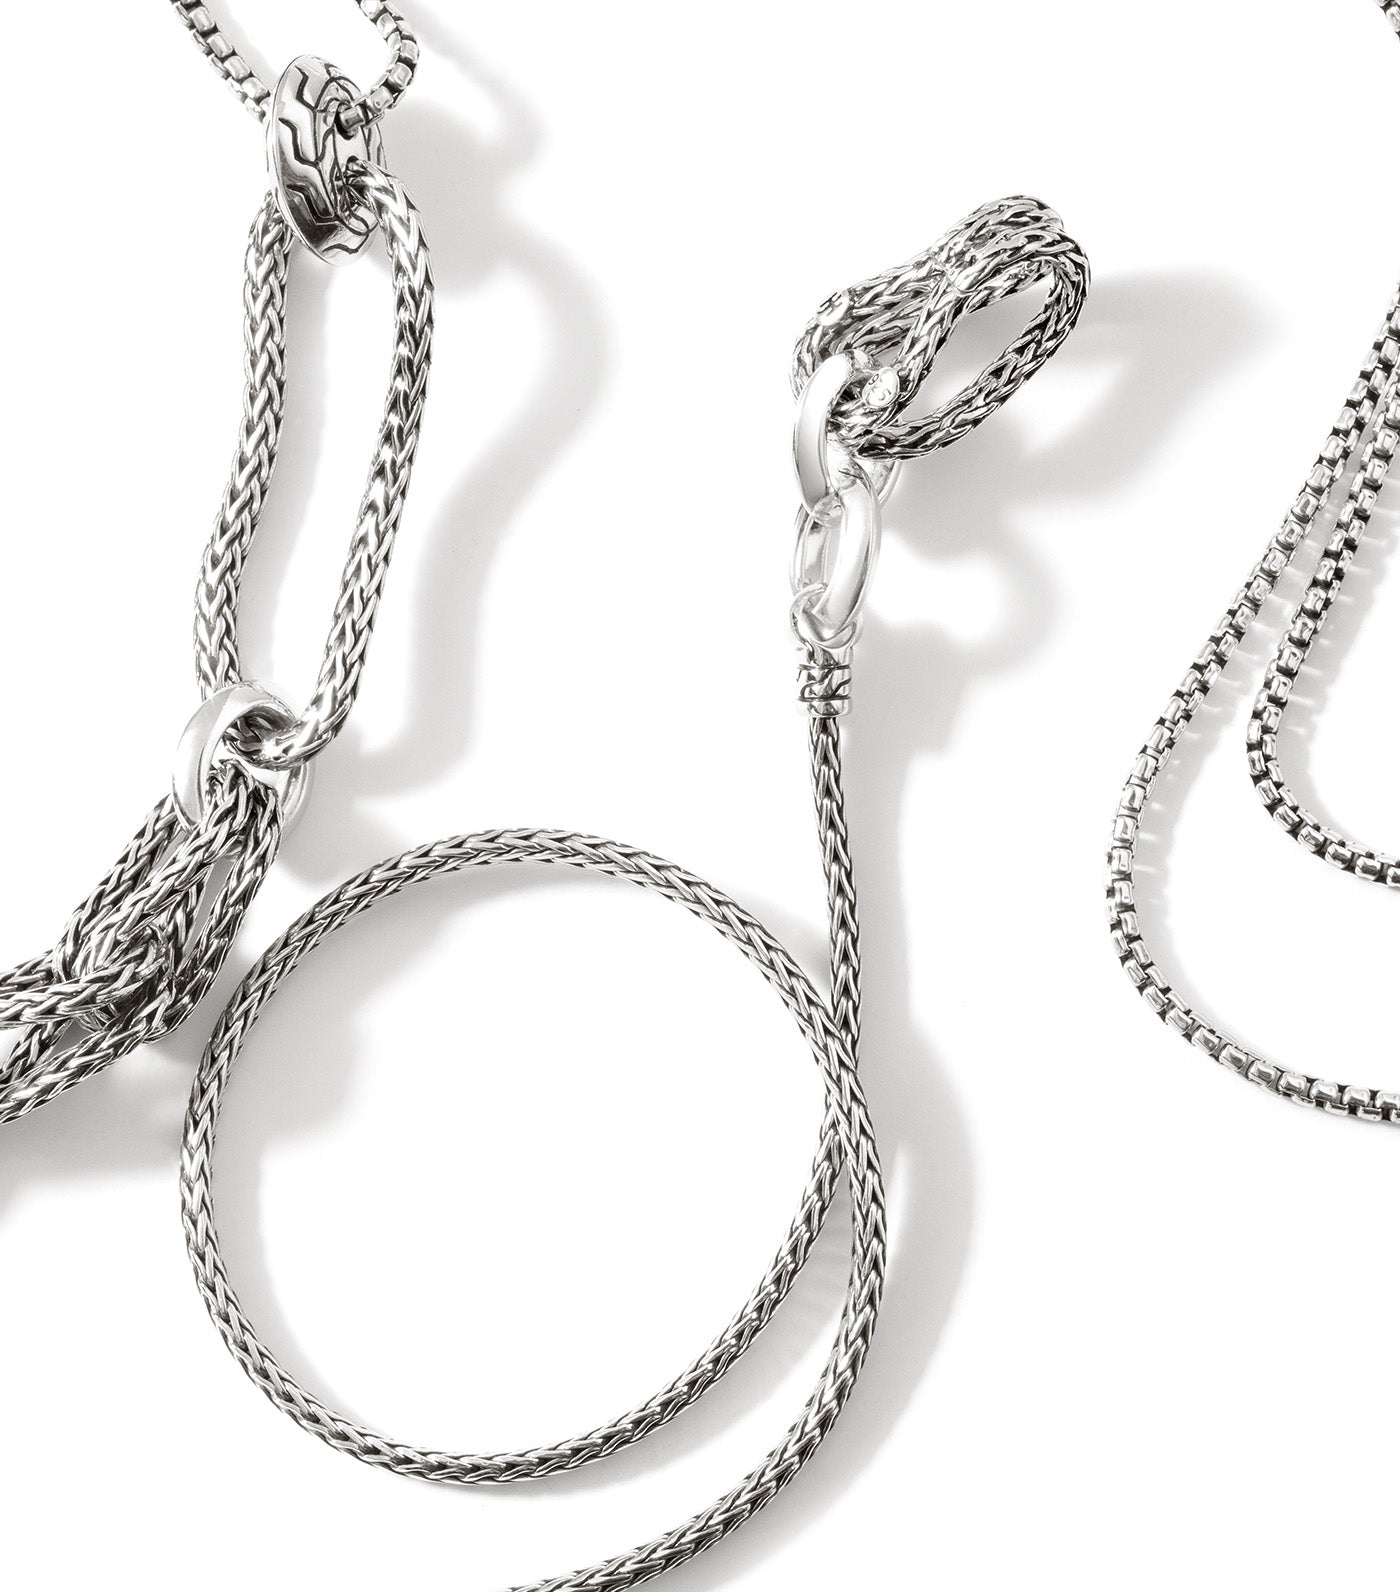 Asli Adjustable Sautoir 2.5mm Chain Necklace Sterling Silver